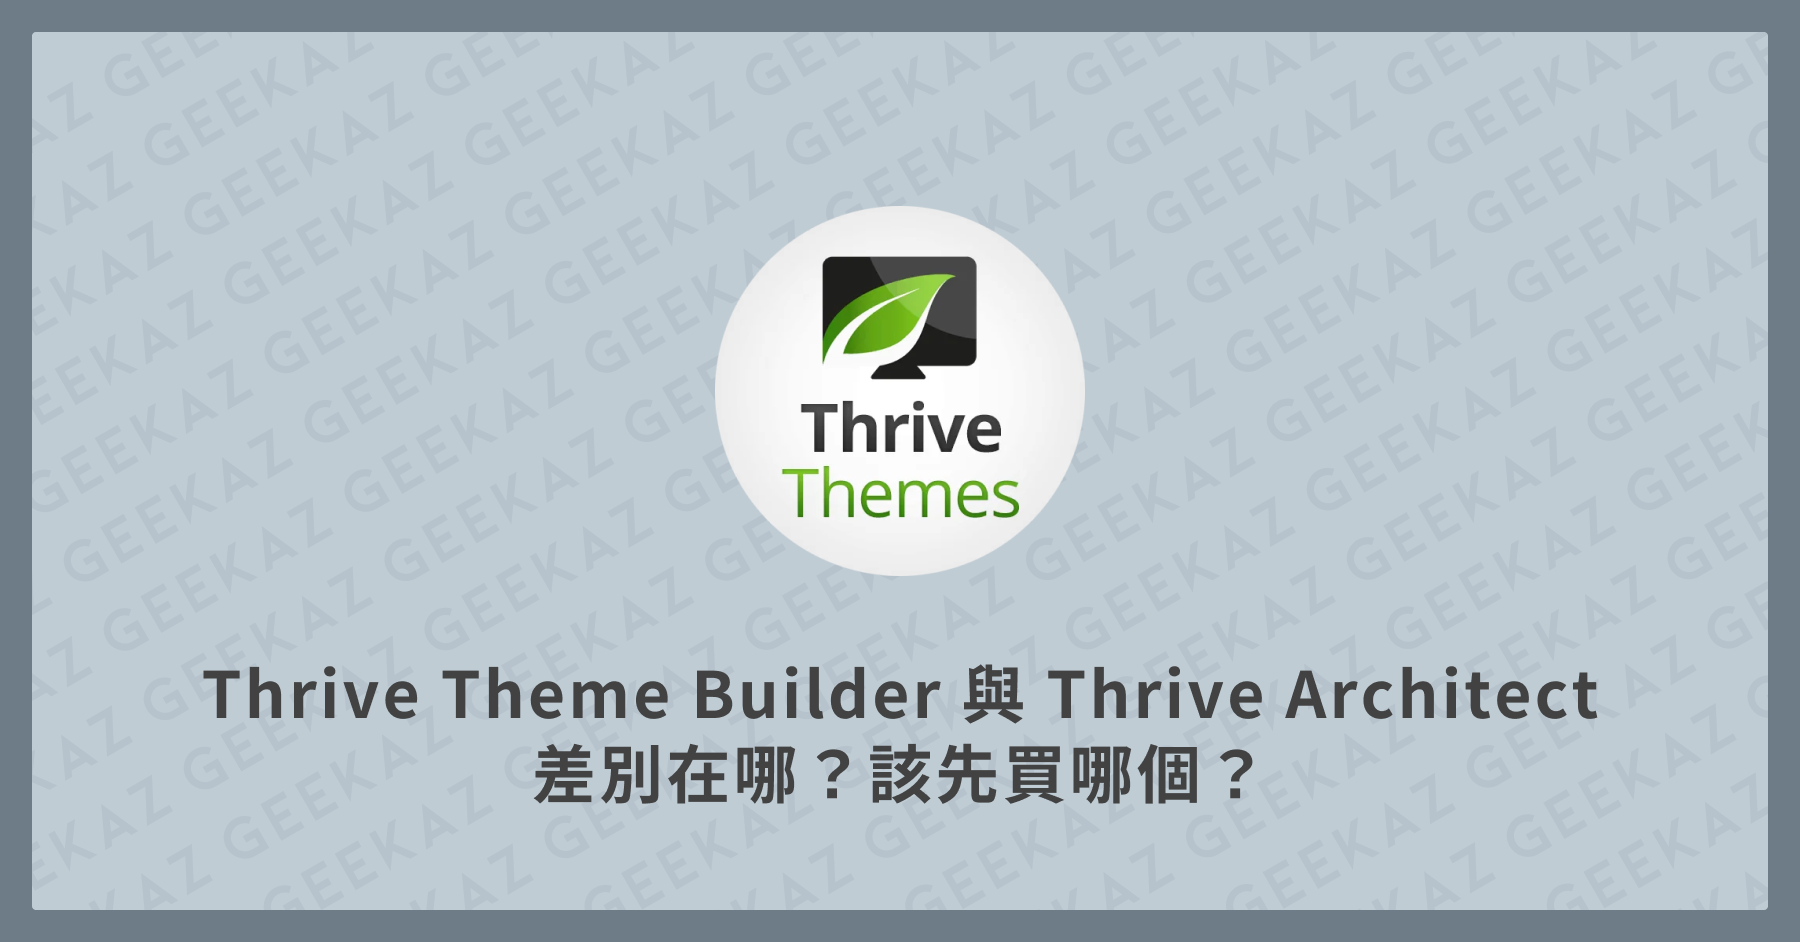 Thrive Theme Builder 與 Thrive Architect 差別在哪